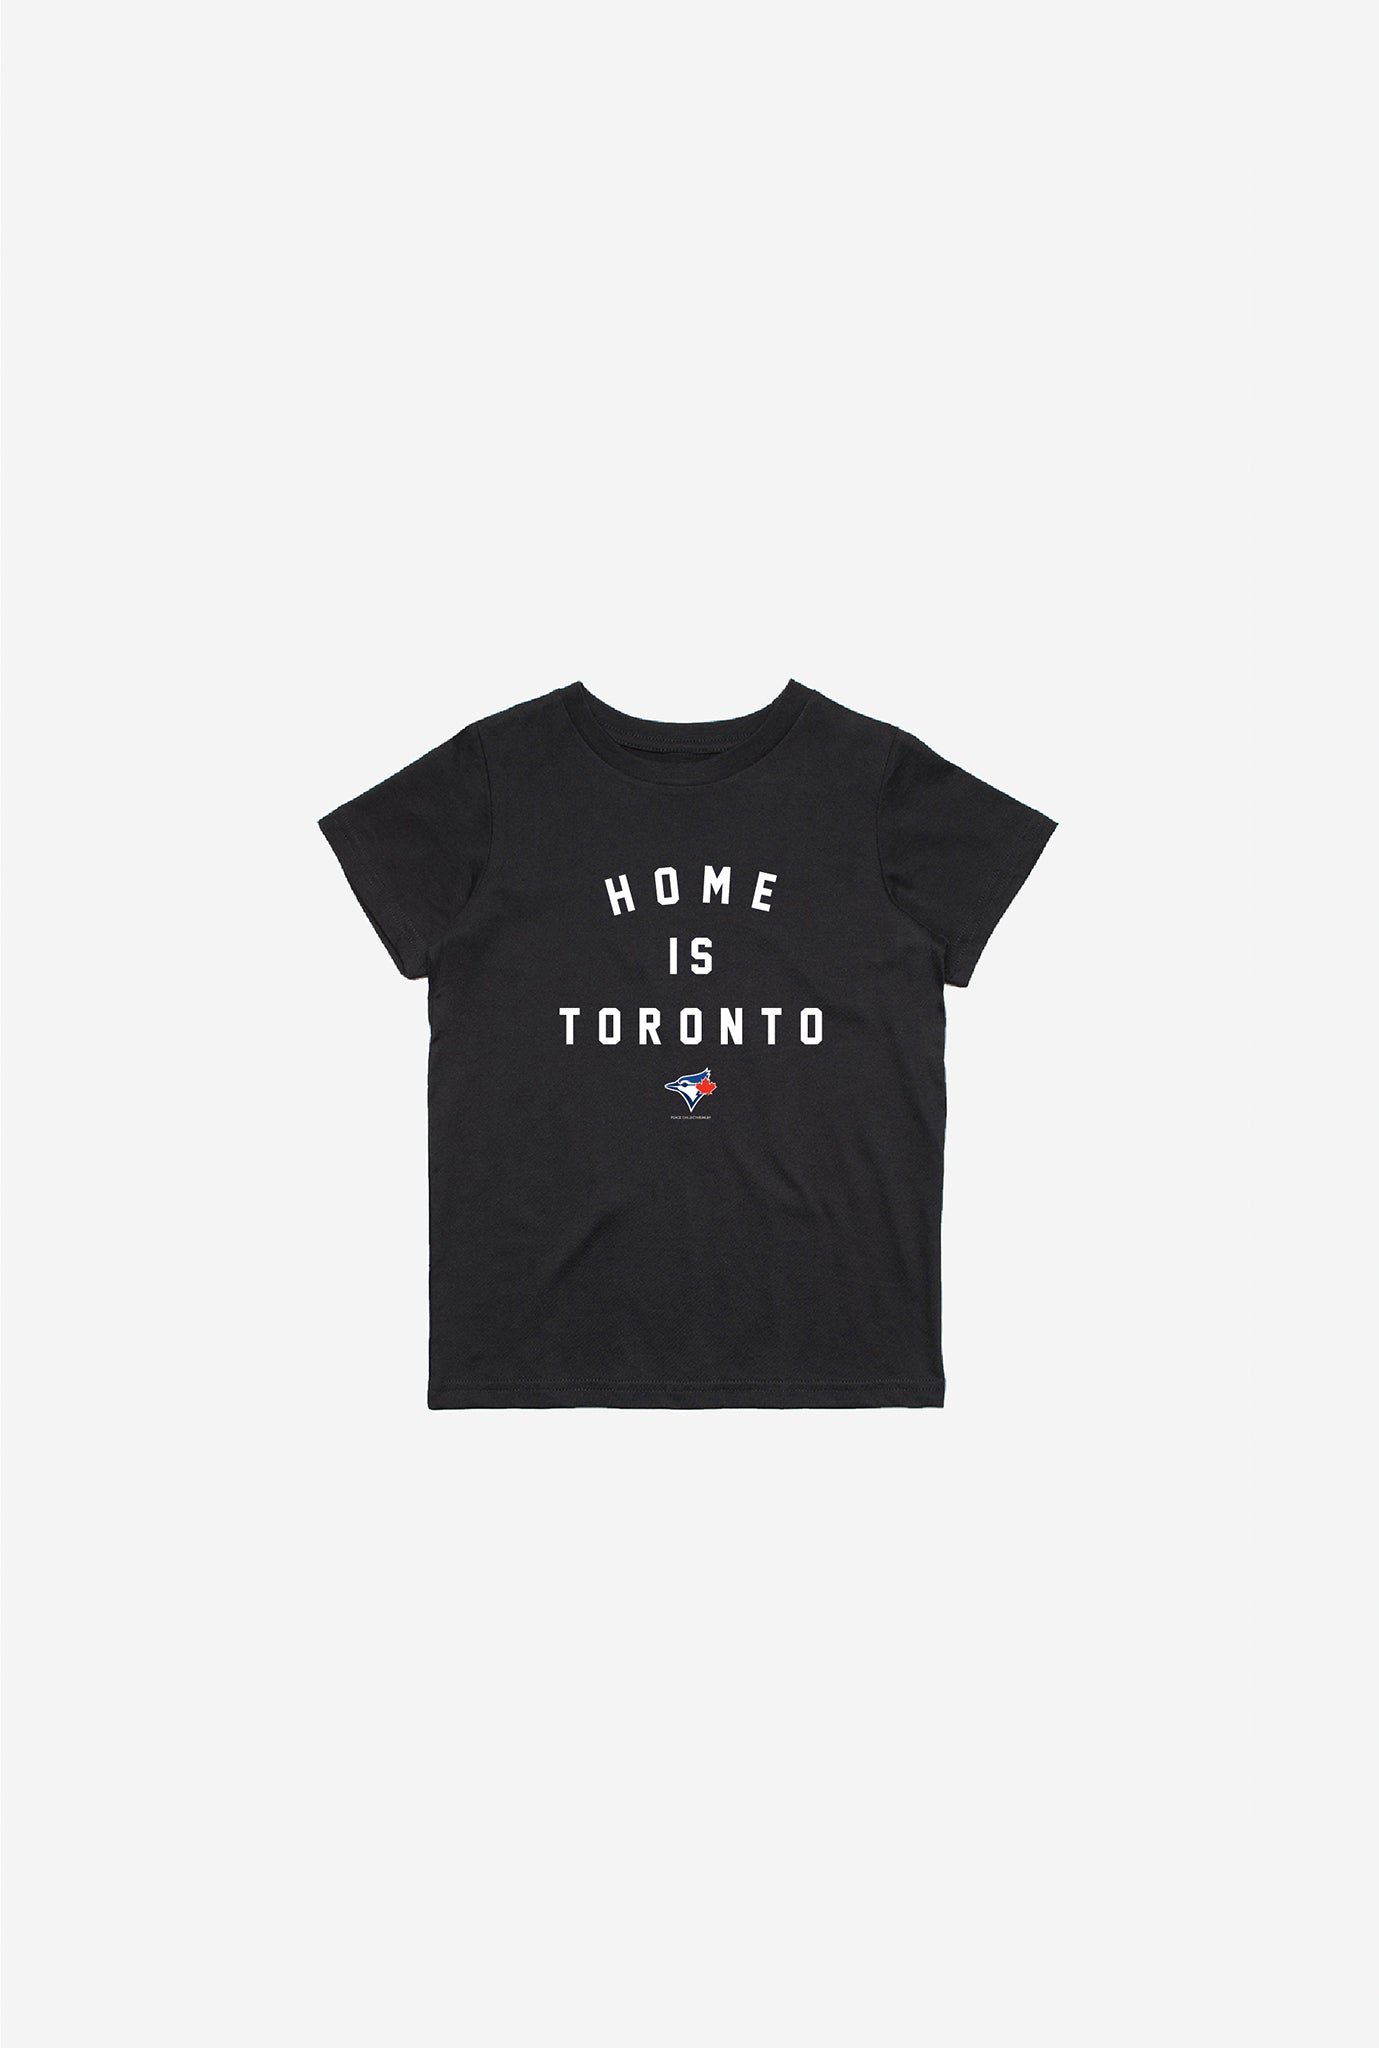 Blue Jays™ Home is Toronto Kids T-Shirt - Black